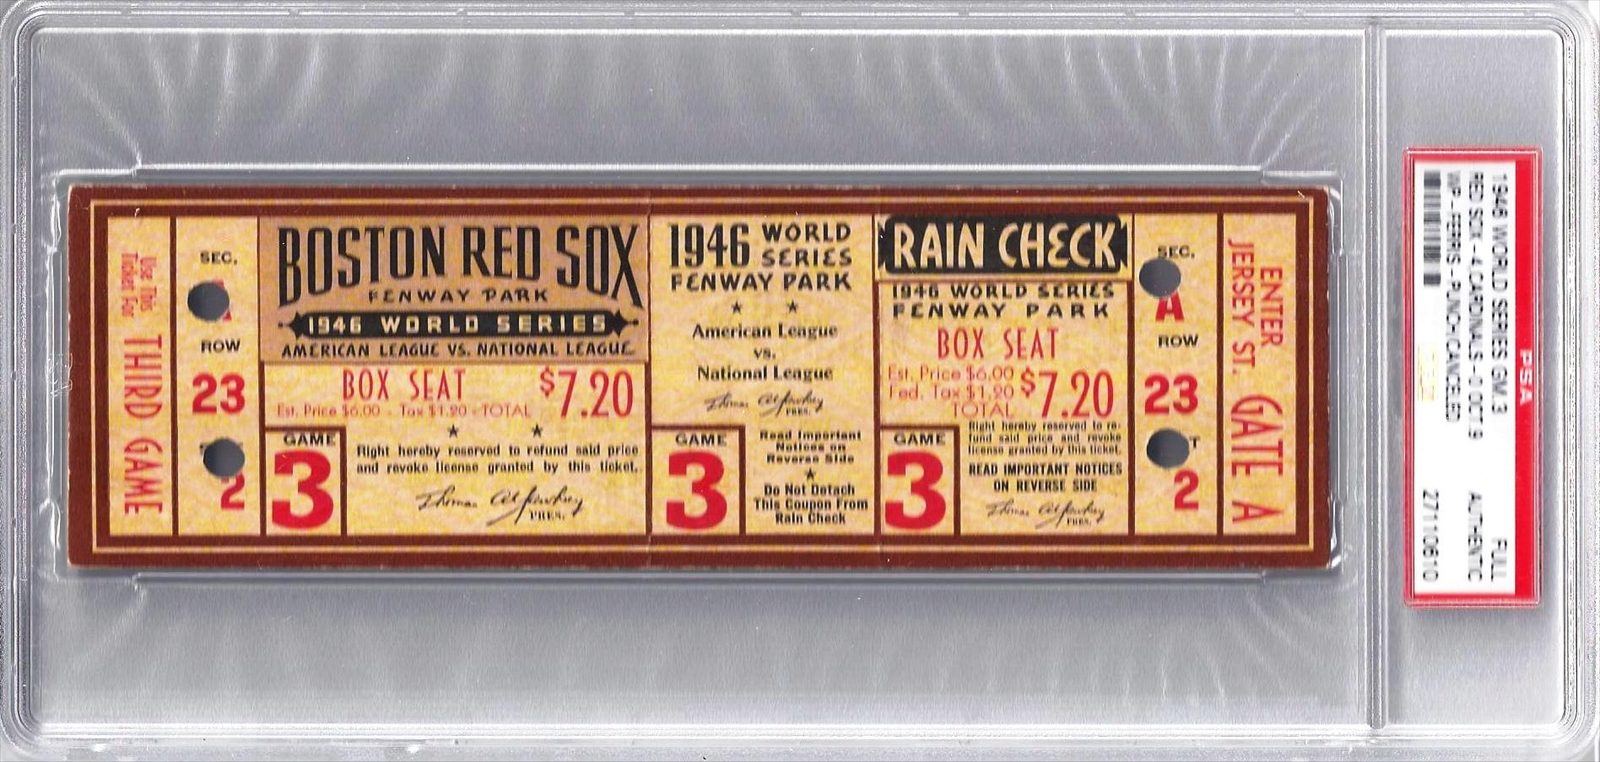 1906 World Series Game (3) full ticket